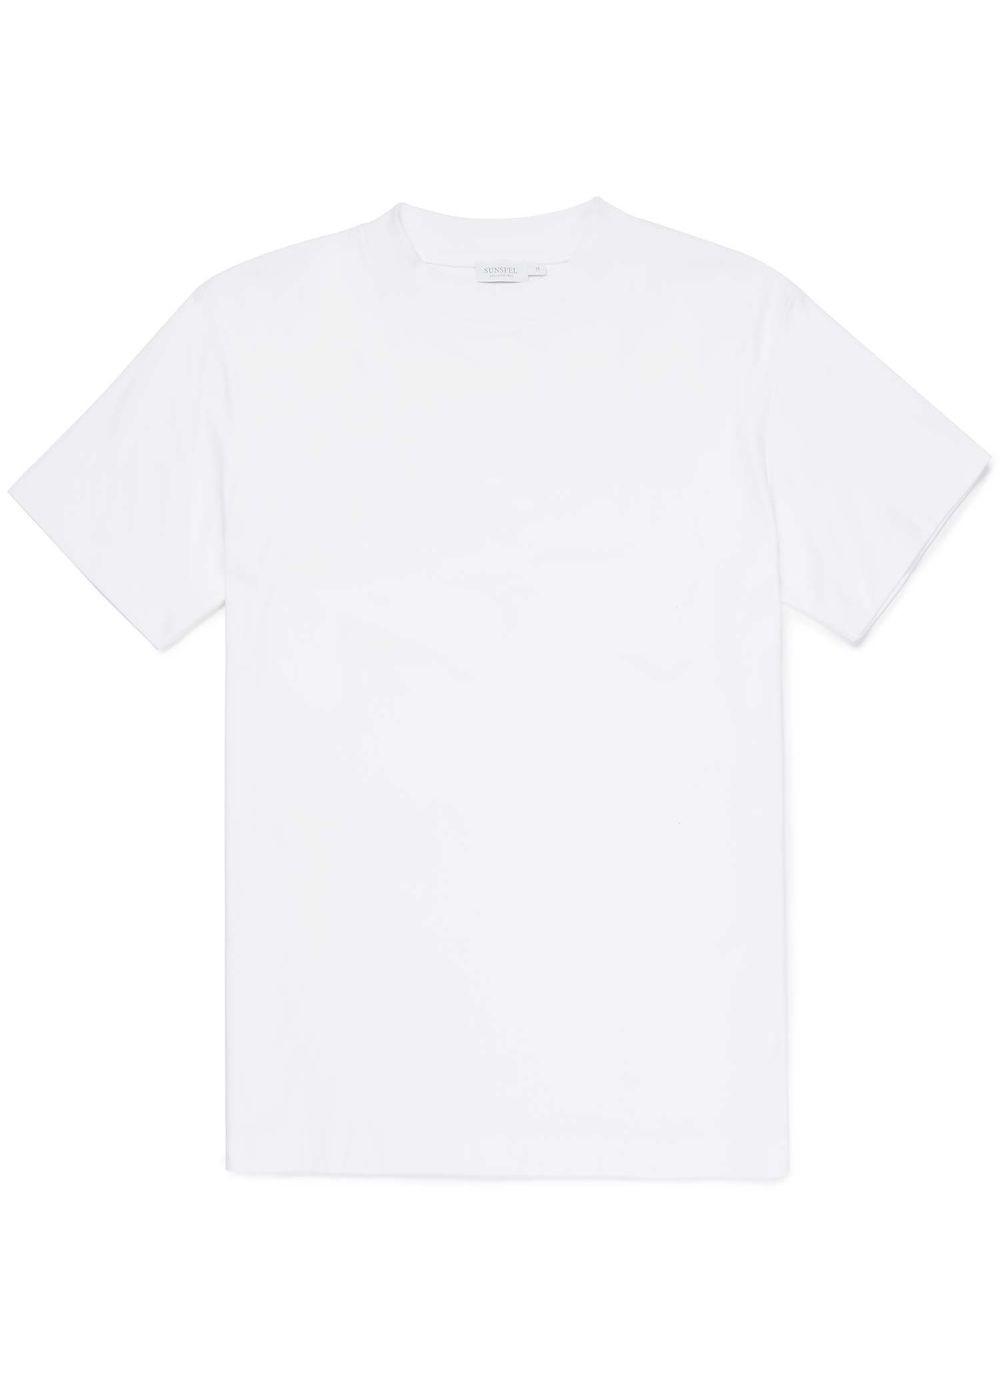 Download Sunspel Men's Brushed Cotton Mock Turtle T-shirt In White ...